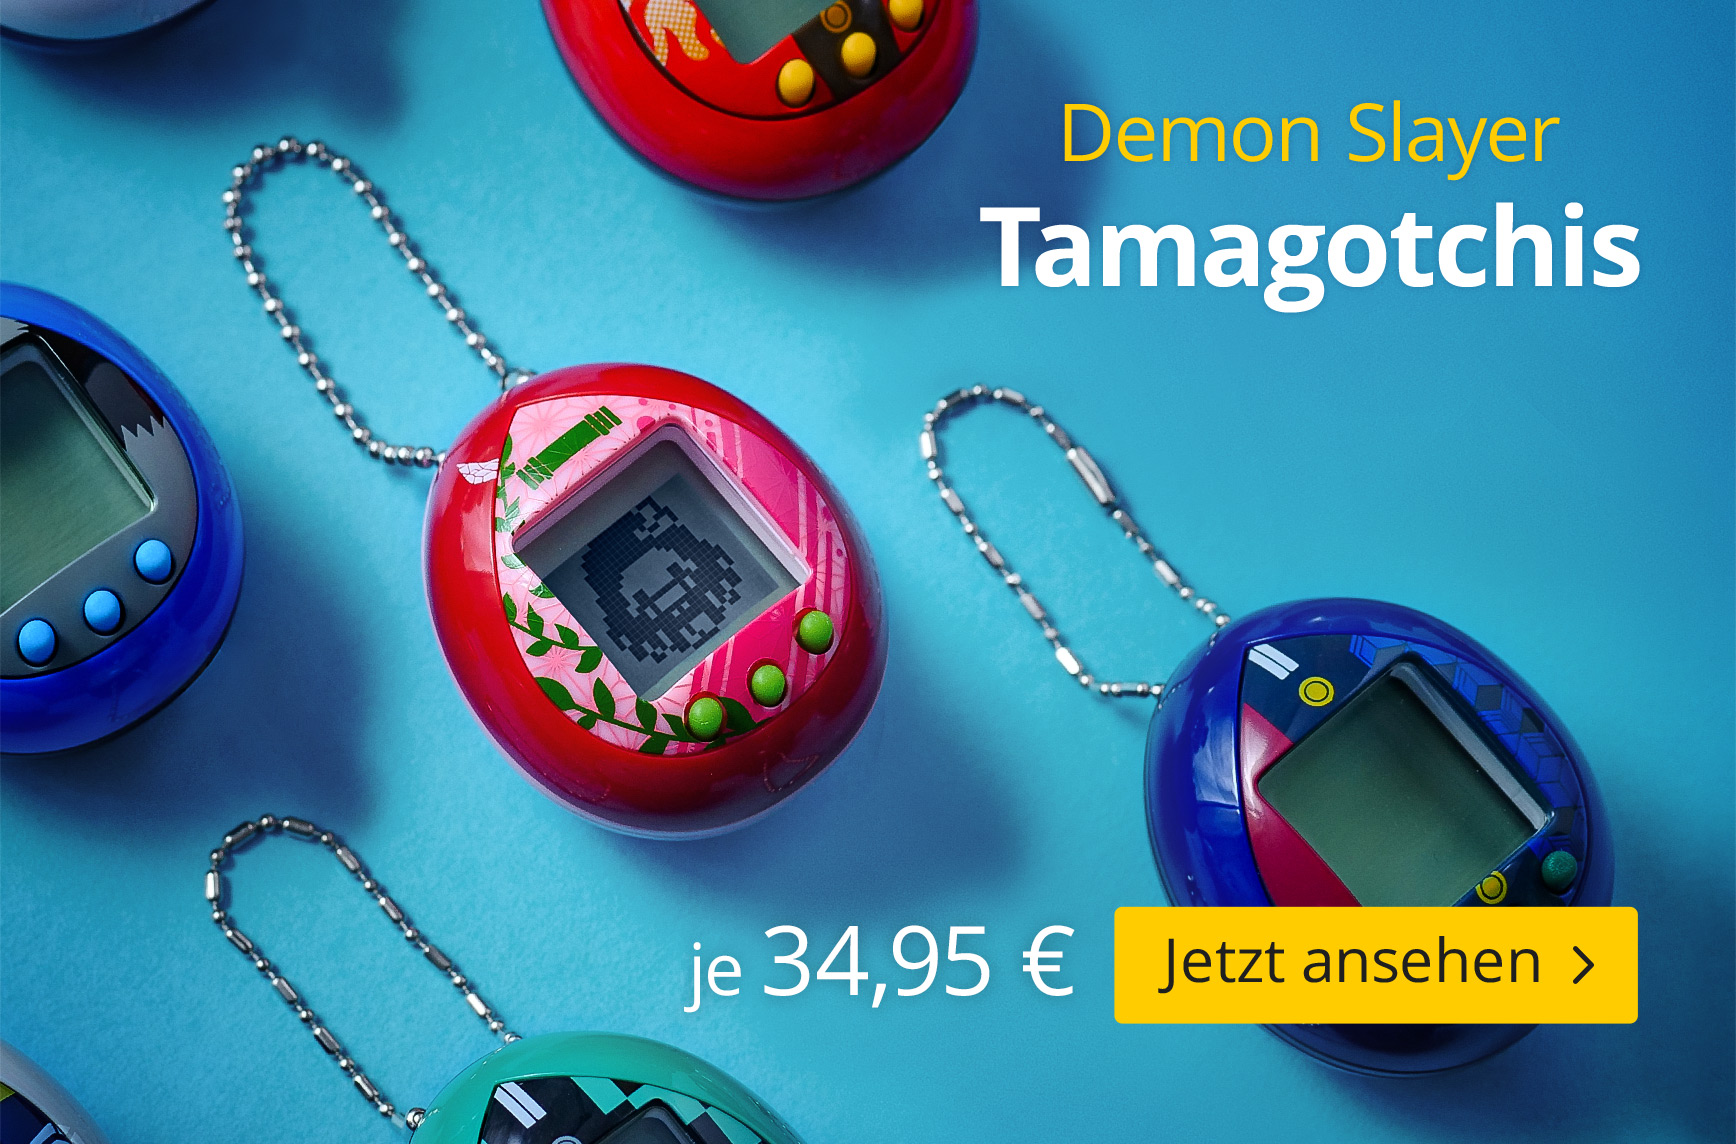 Demon Slayer Tamagotchis bei Elbenwald - je 34,95 EUR